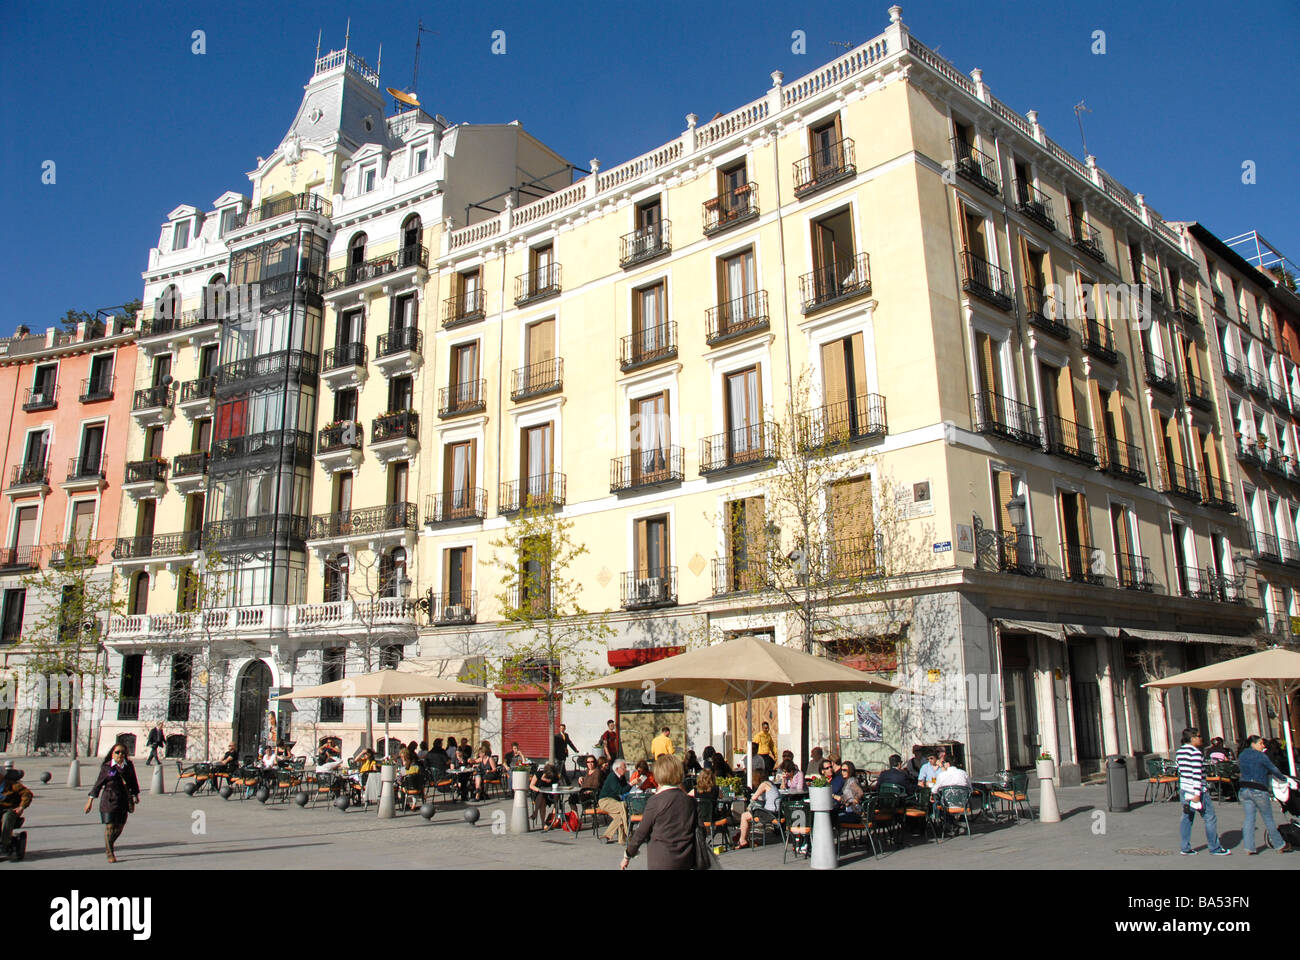 Street scene, buildings, terrace, Madrid, Spain Stock Photo